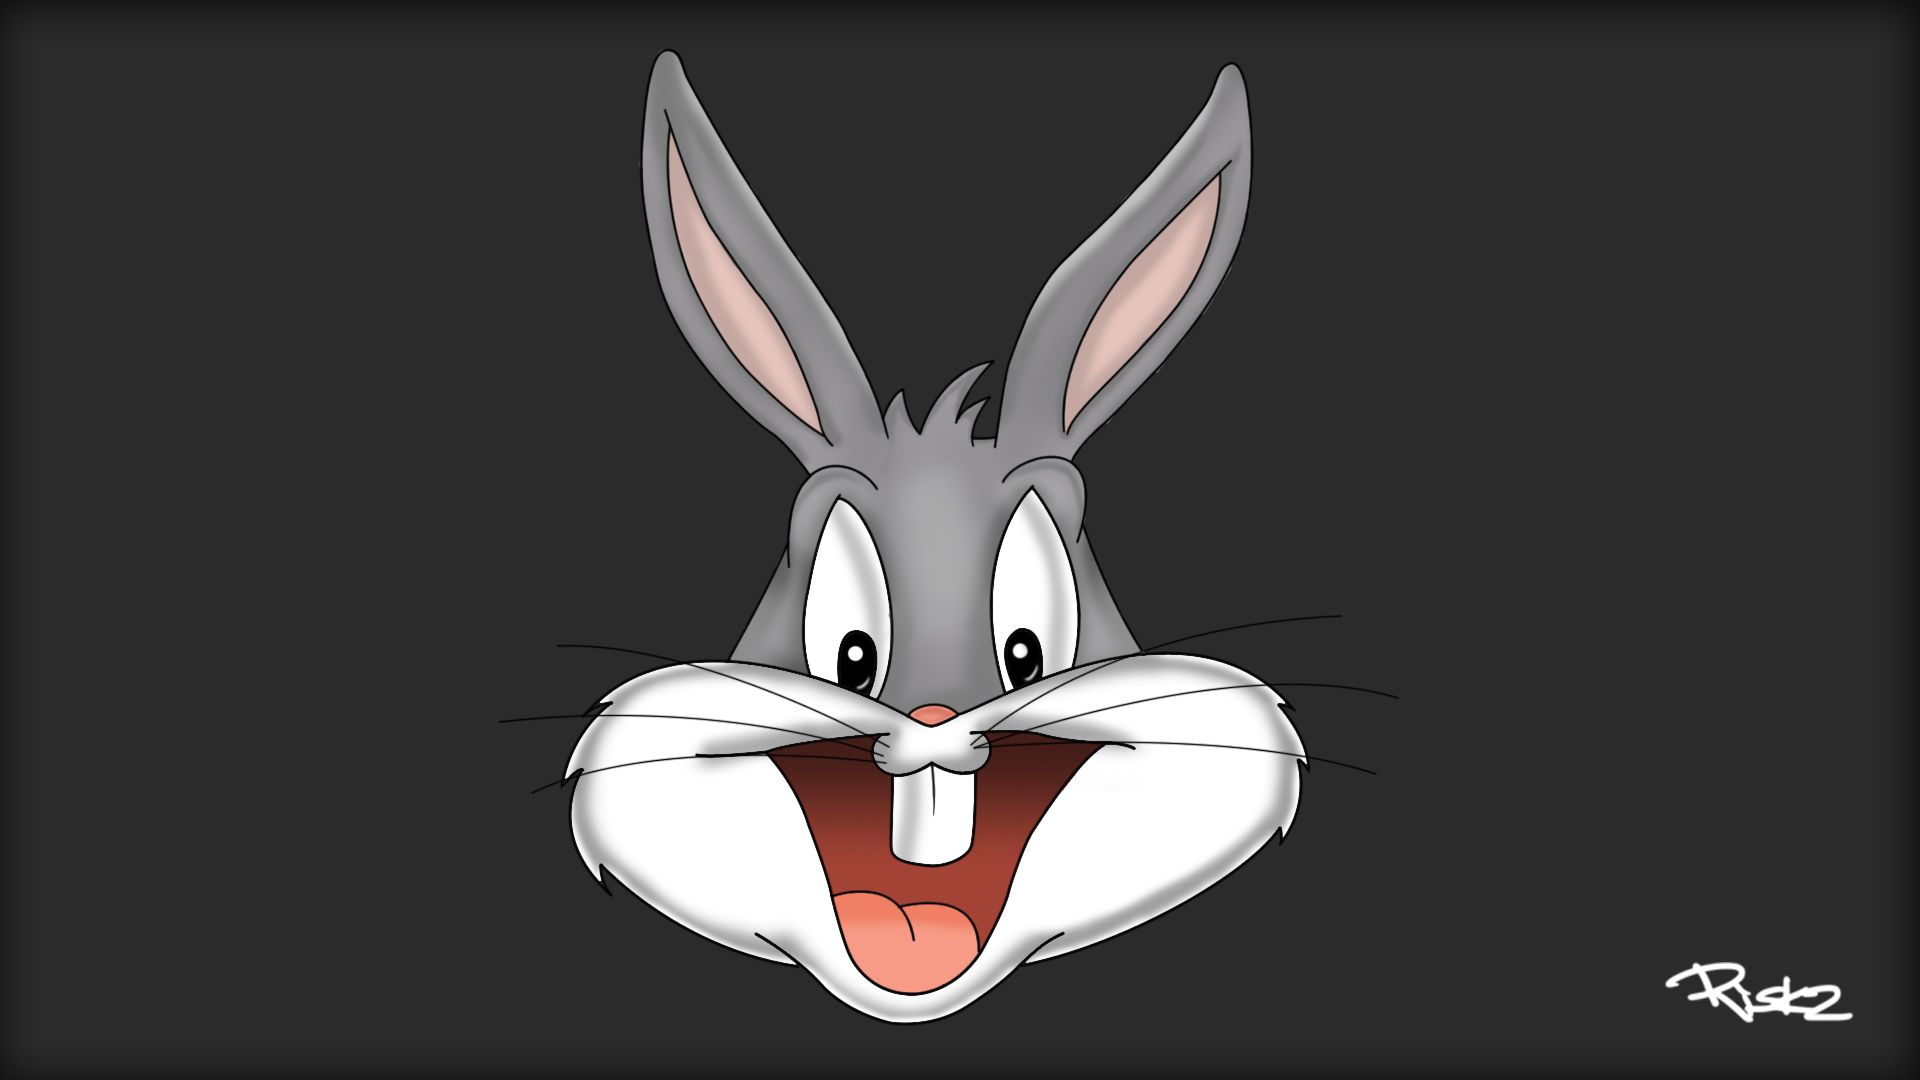 BUGS BUNNY looney tunes wallpaperx1080. Bugs bunny cartoons, Bunny wallpaper, Looney tunes bugs bunny